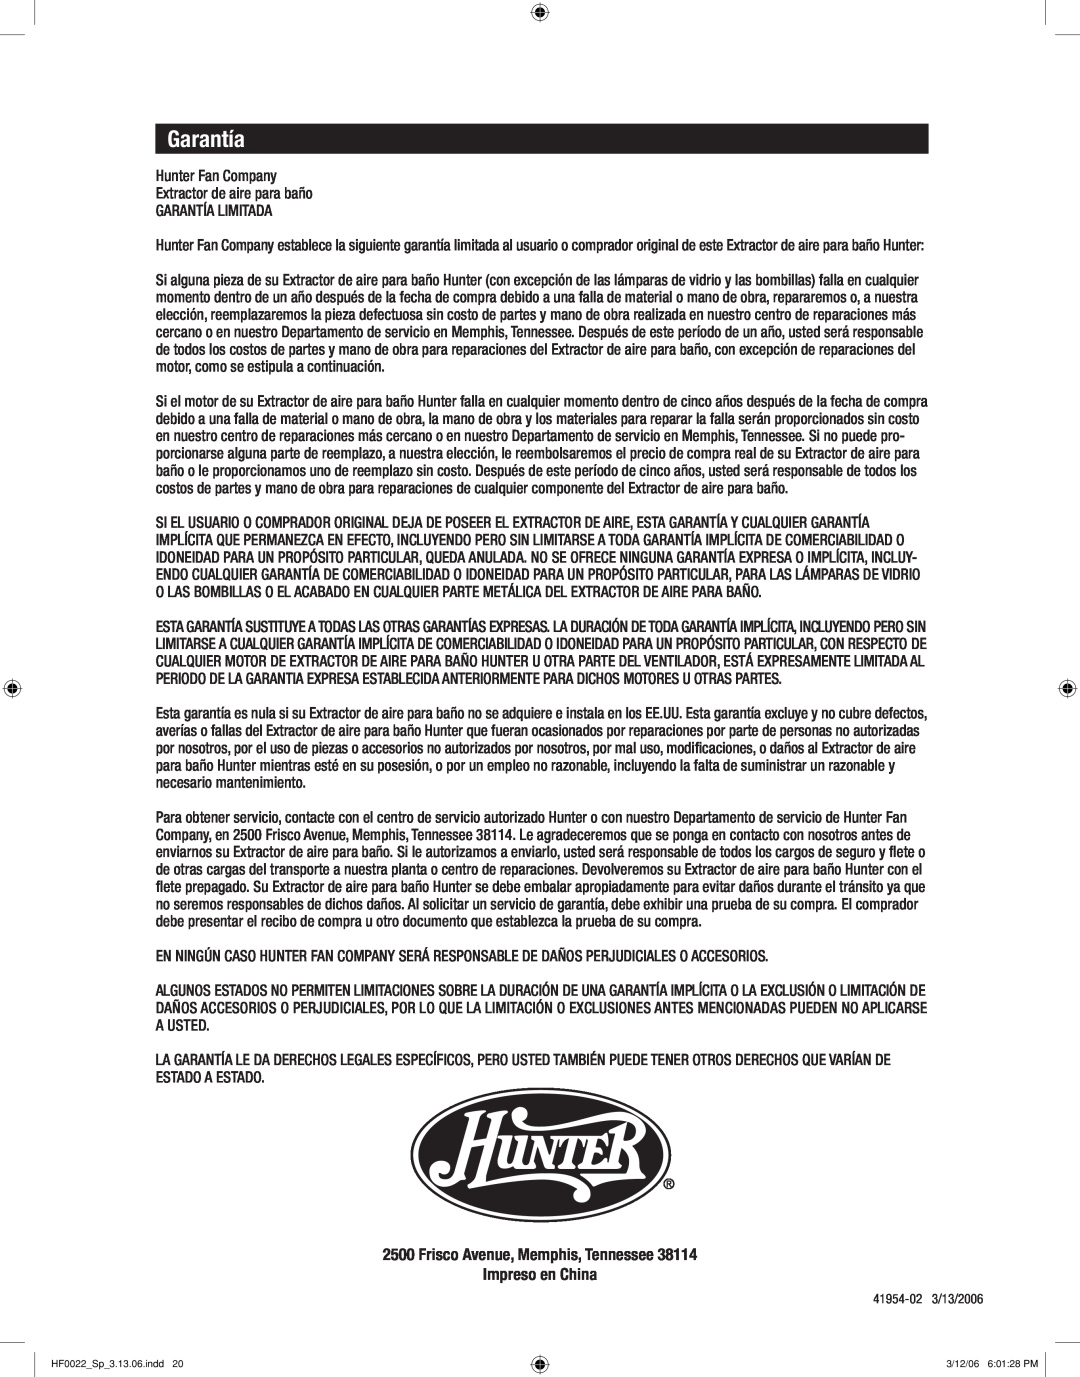 Hunter Fan 83006 manual Garantía, Frisco Avenue, Memphis, Tennessee Impreso en China 